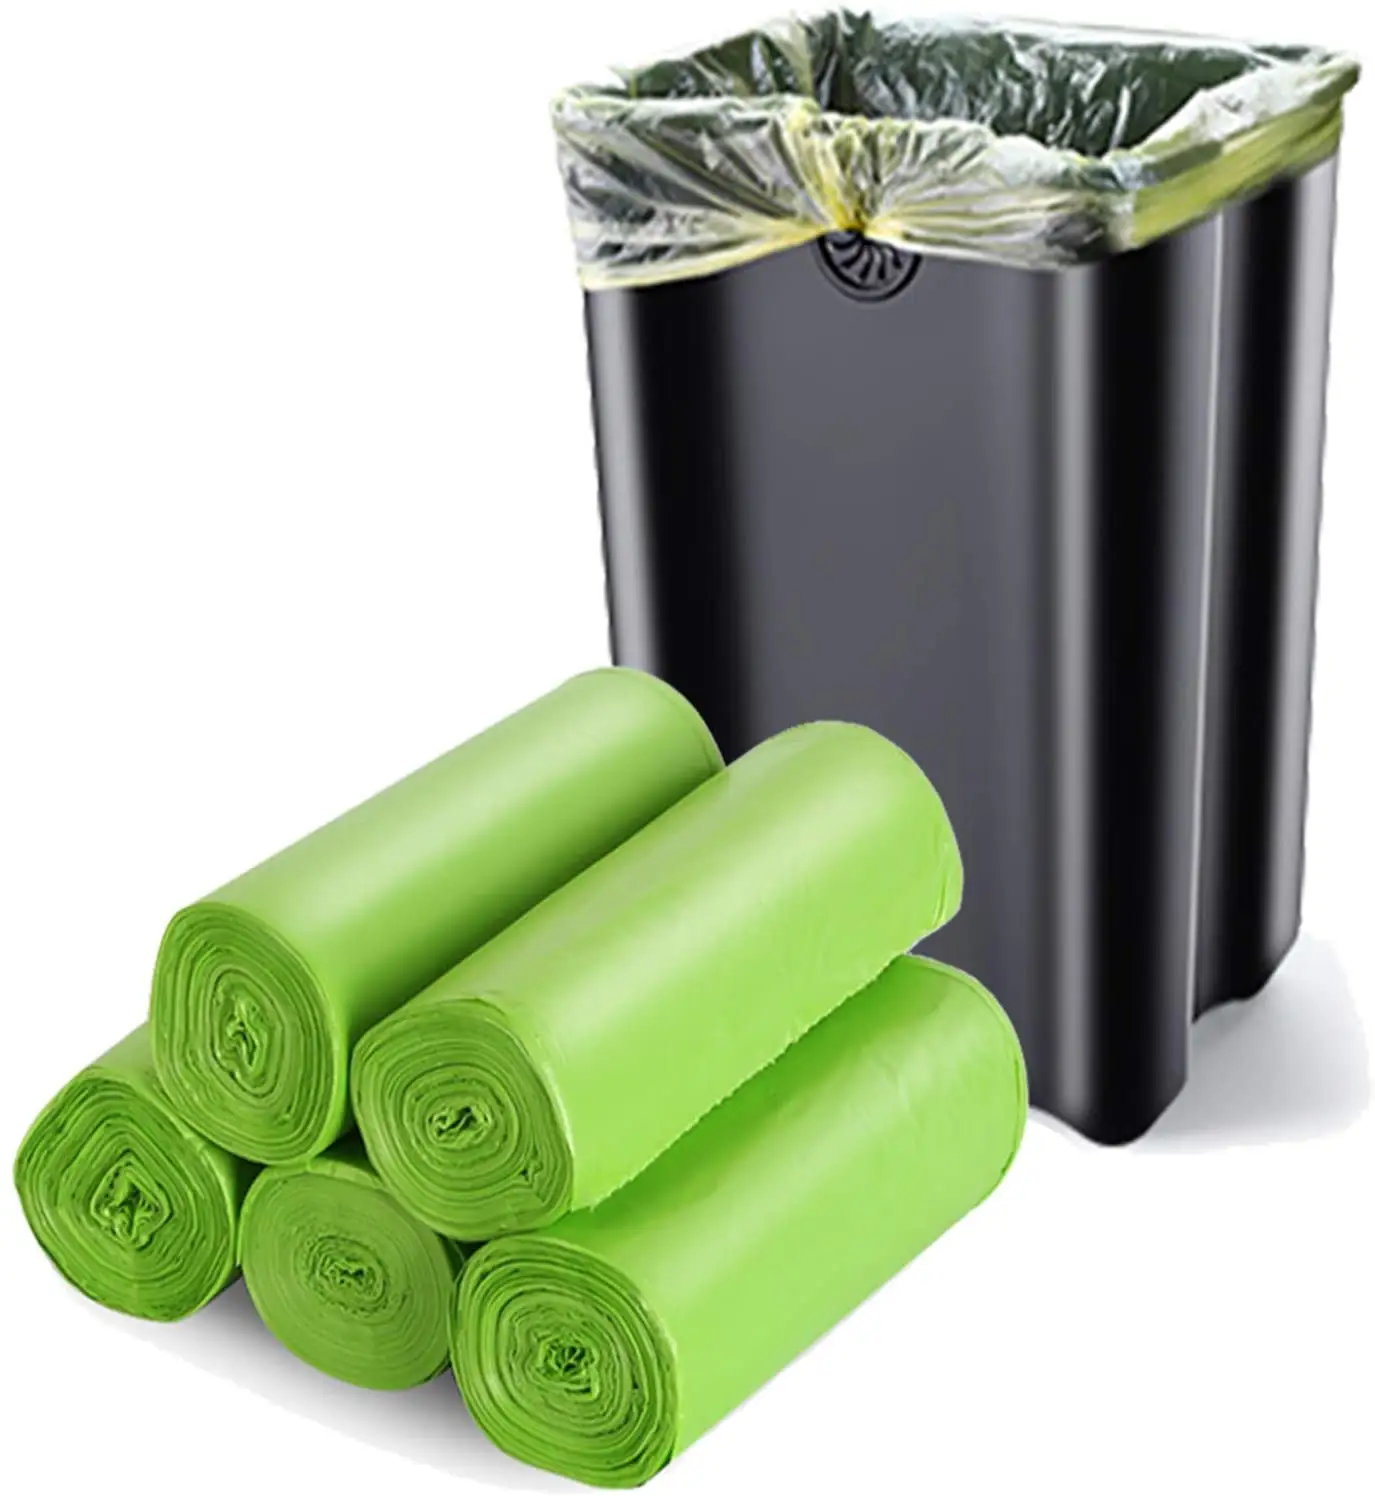 Recycelbare Mülls äcke Kompost ierbare Mülls äcke oxo biologisch abbaubare Plastiktüten